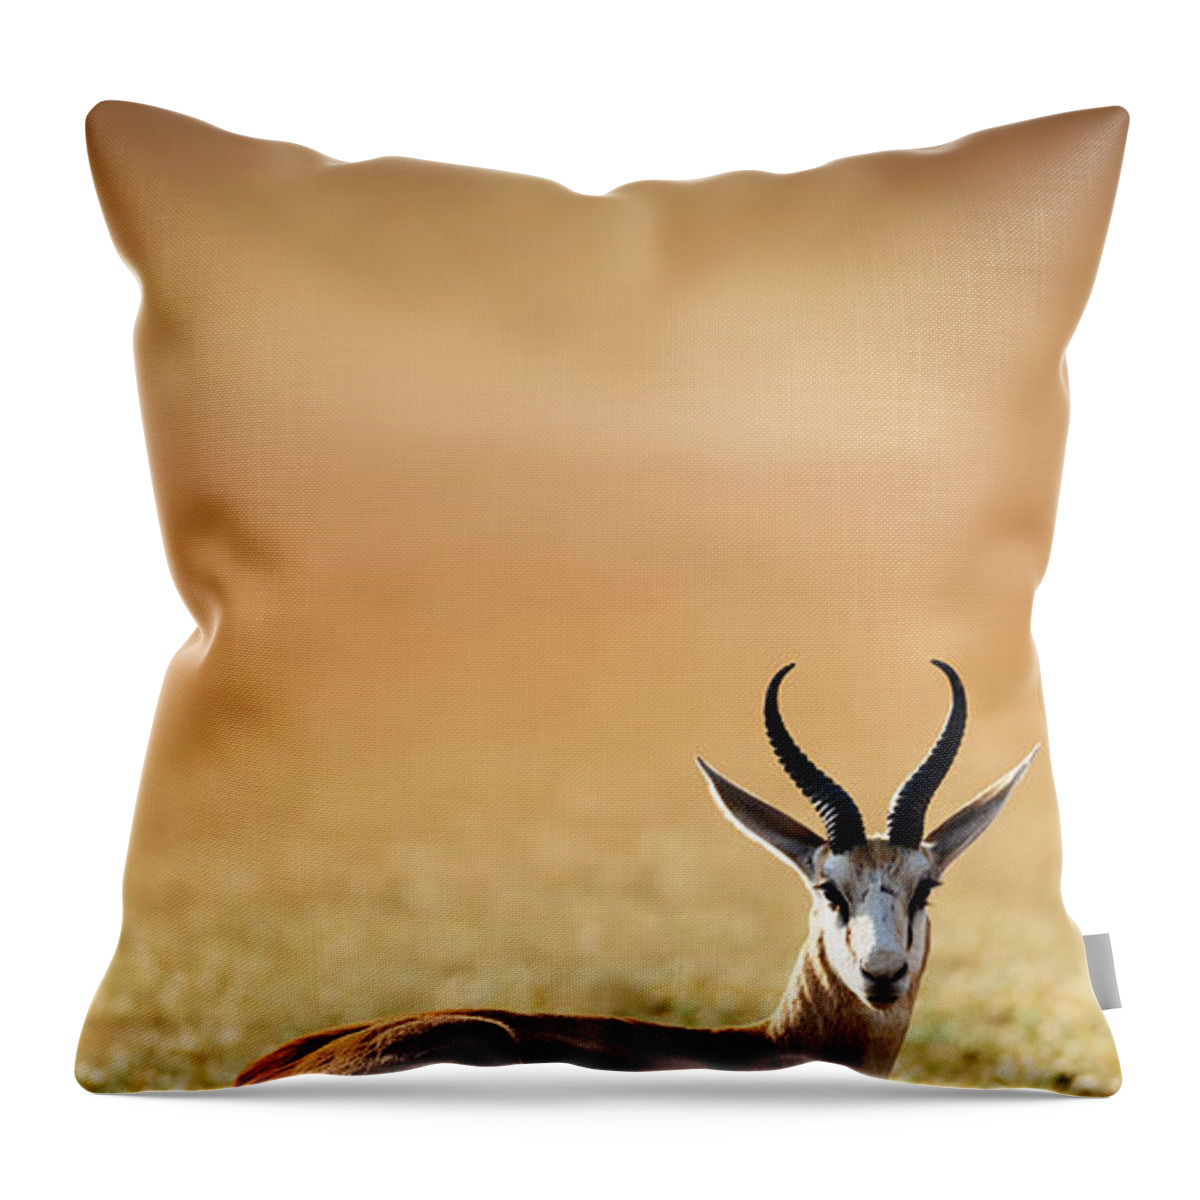 Springbok Throw Pillow featuring the photograph Springbok resting on green desert grass by Johan Swanepoel